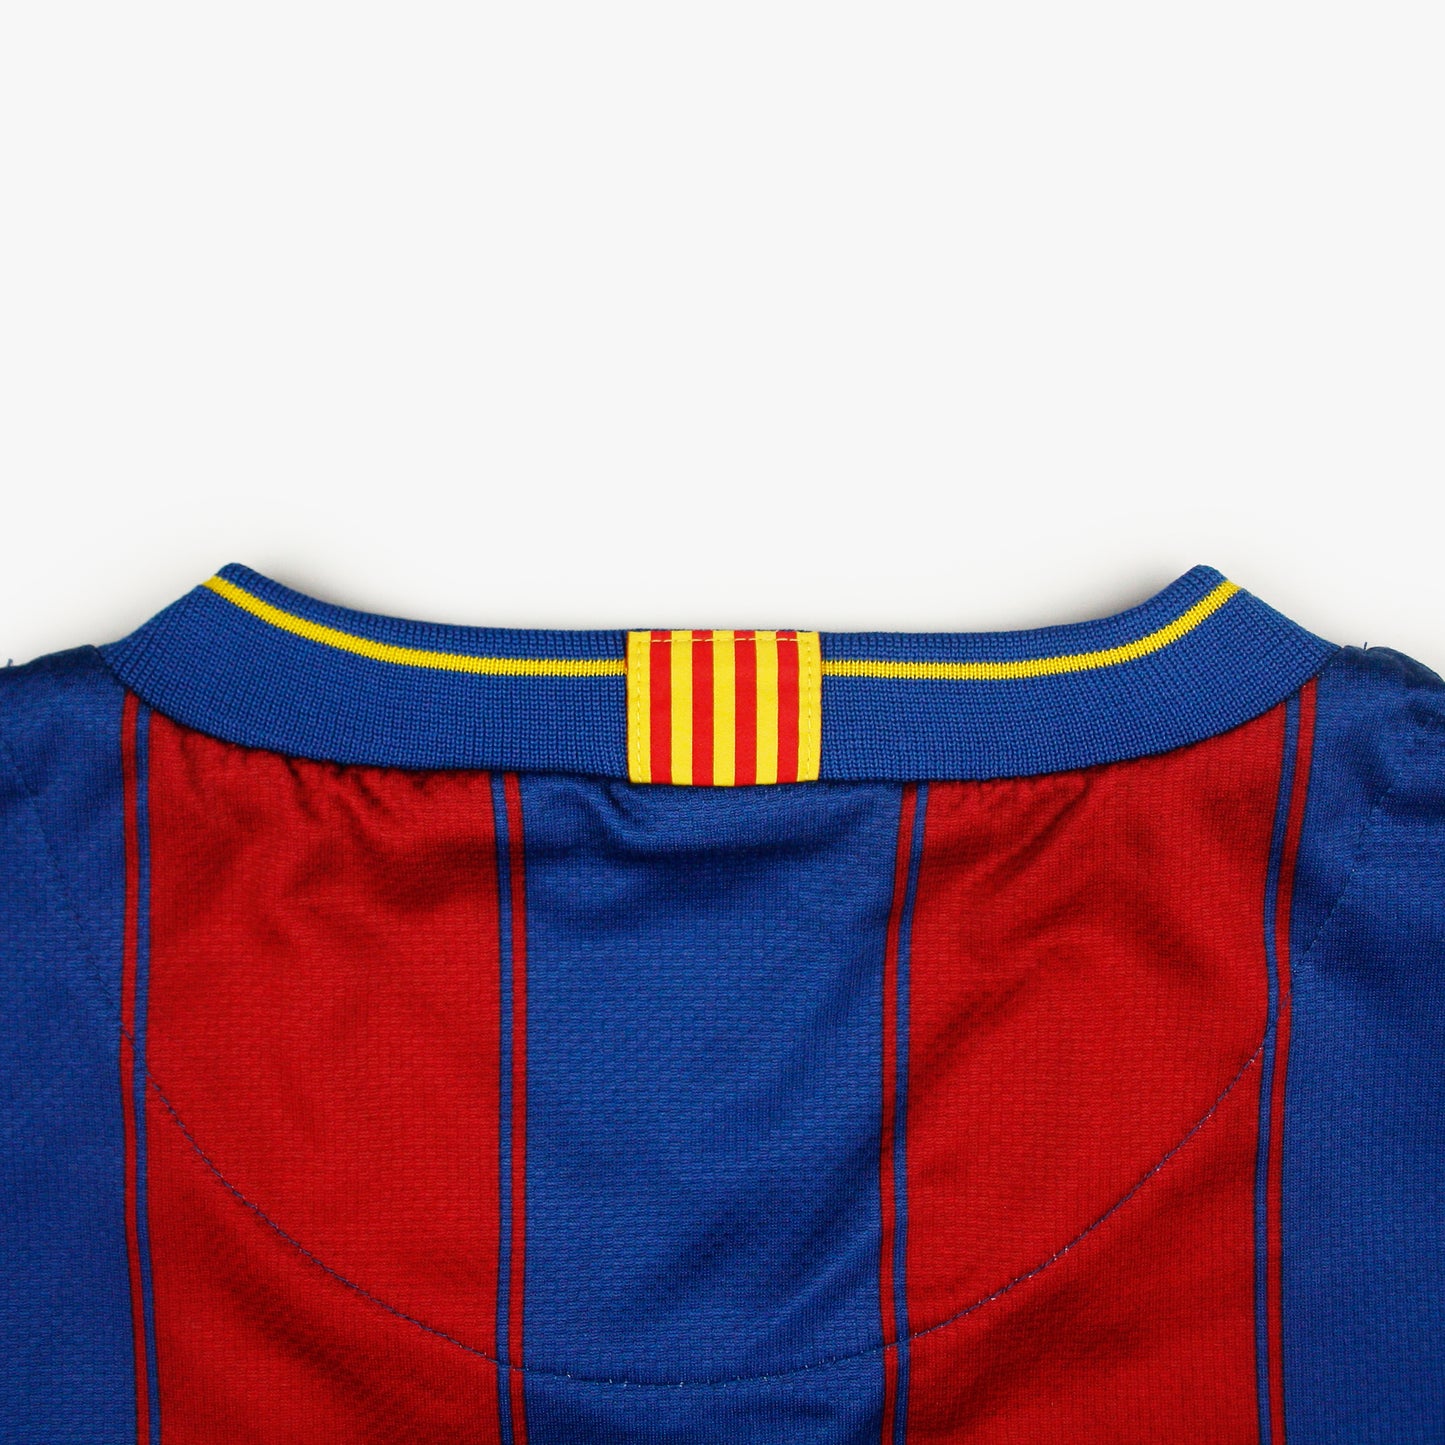 Barcelona 09/10 • Home Shirt • XL